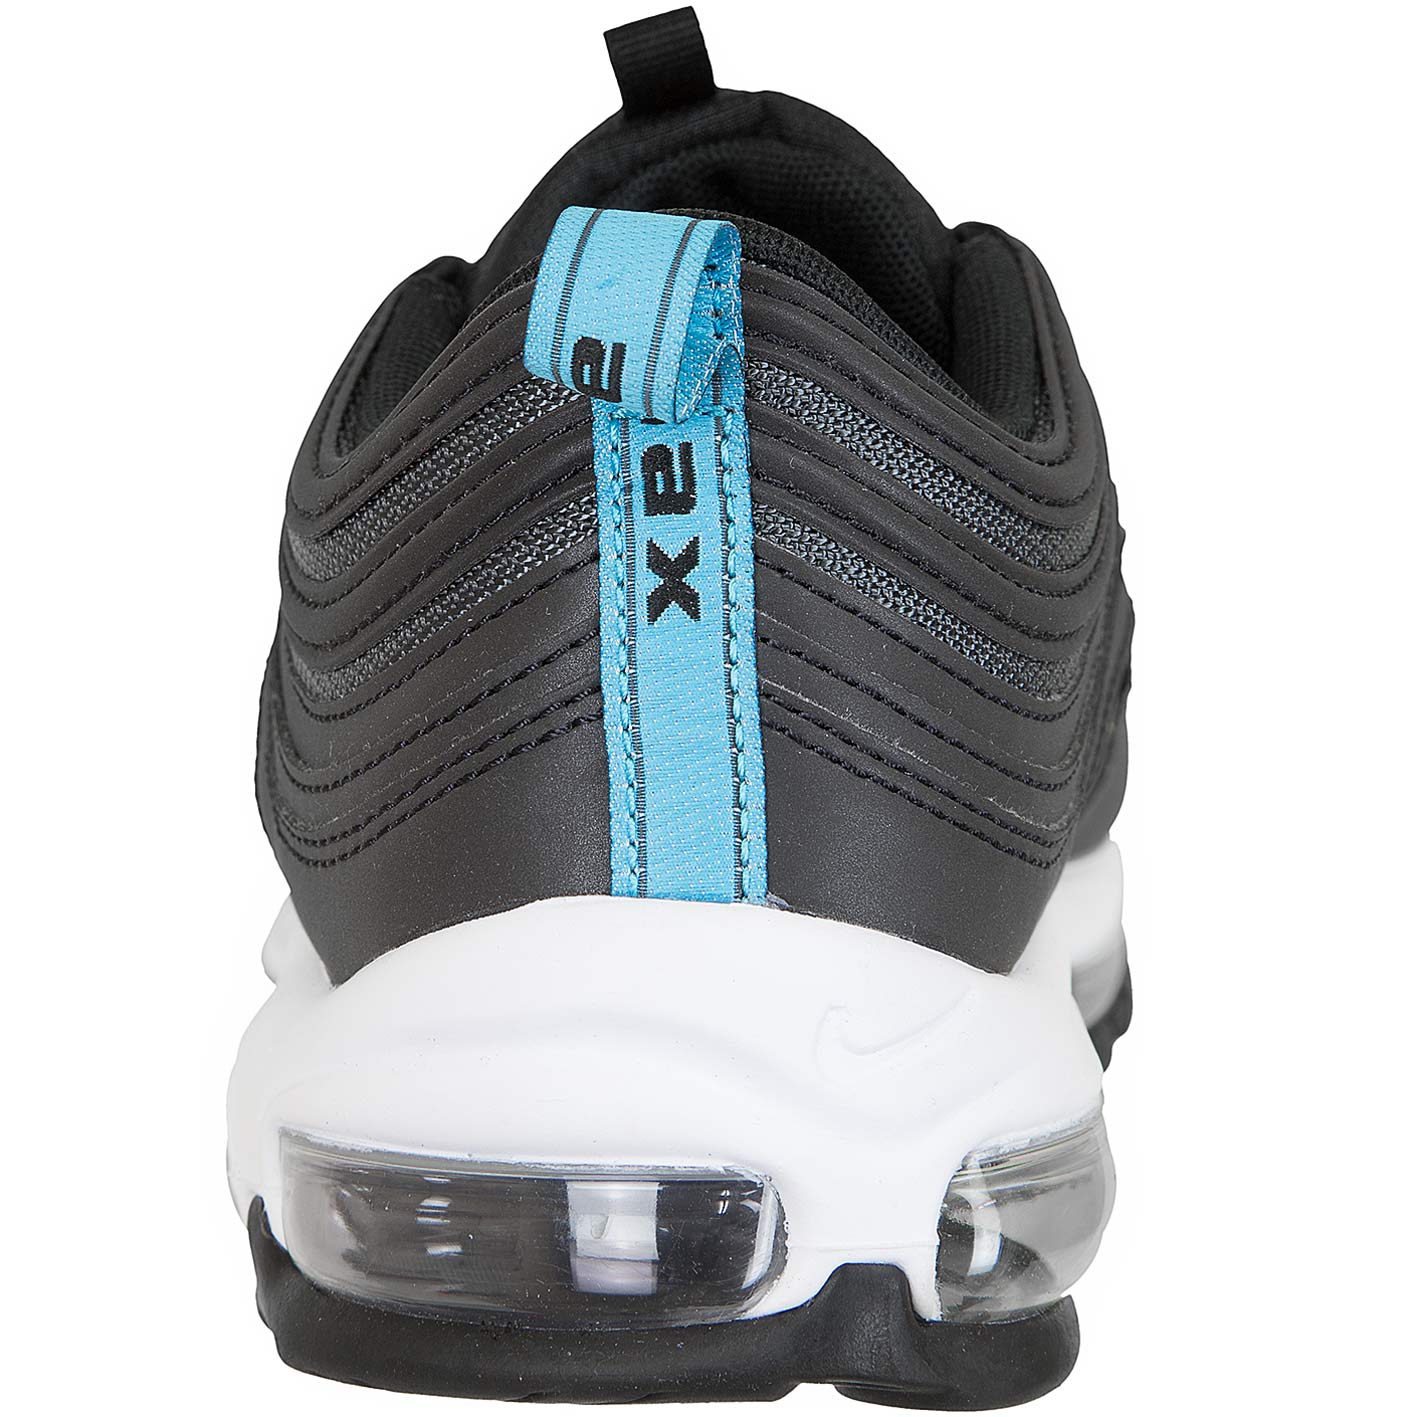 ☆ Nike Sneaker Air Max 97 schwarz/blau - hier bestellen!